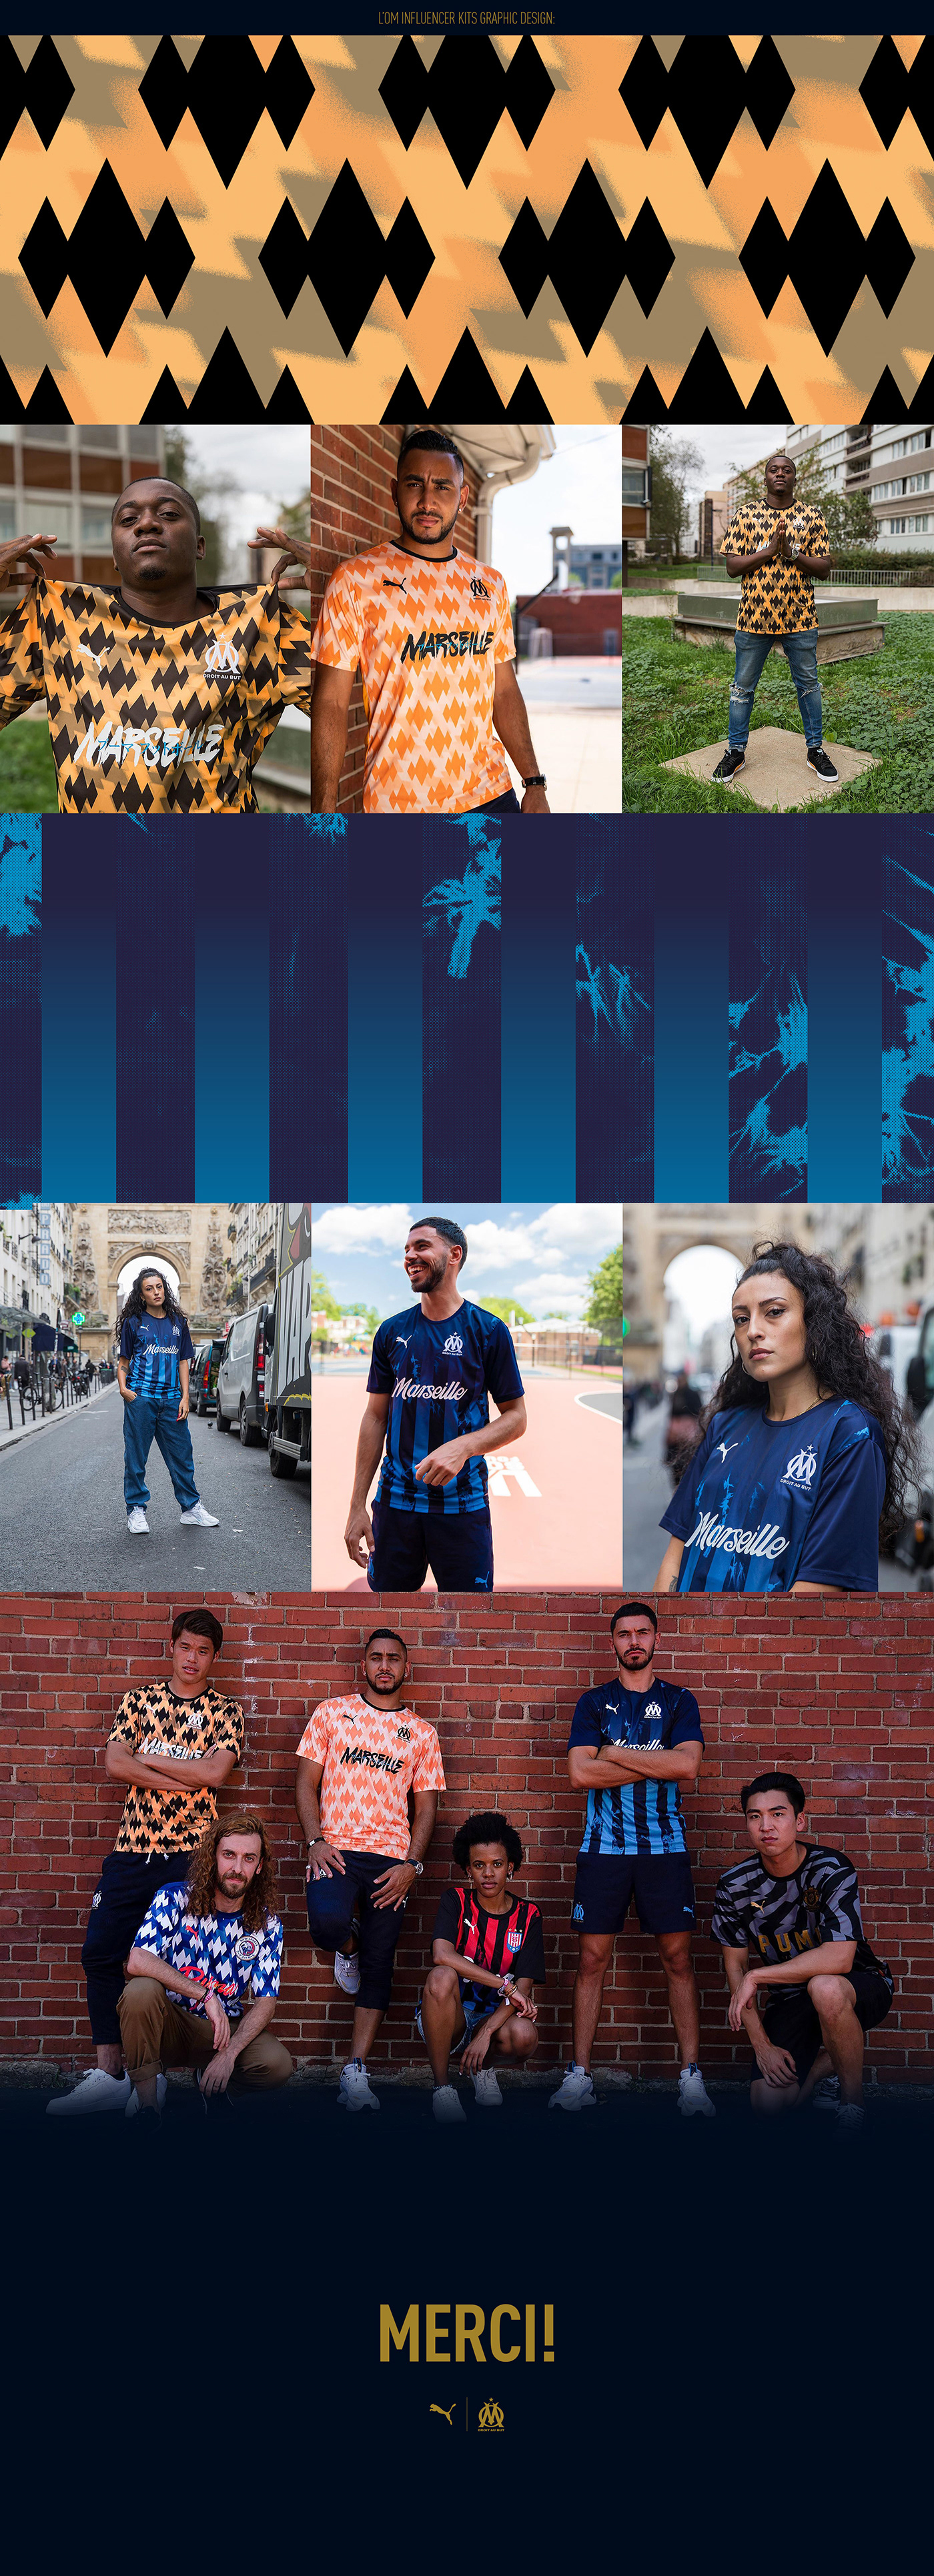 Graphic Design Olympique de Marseille Kits 2019 / 2020 on Behance